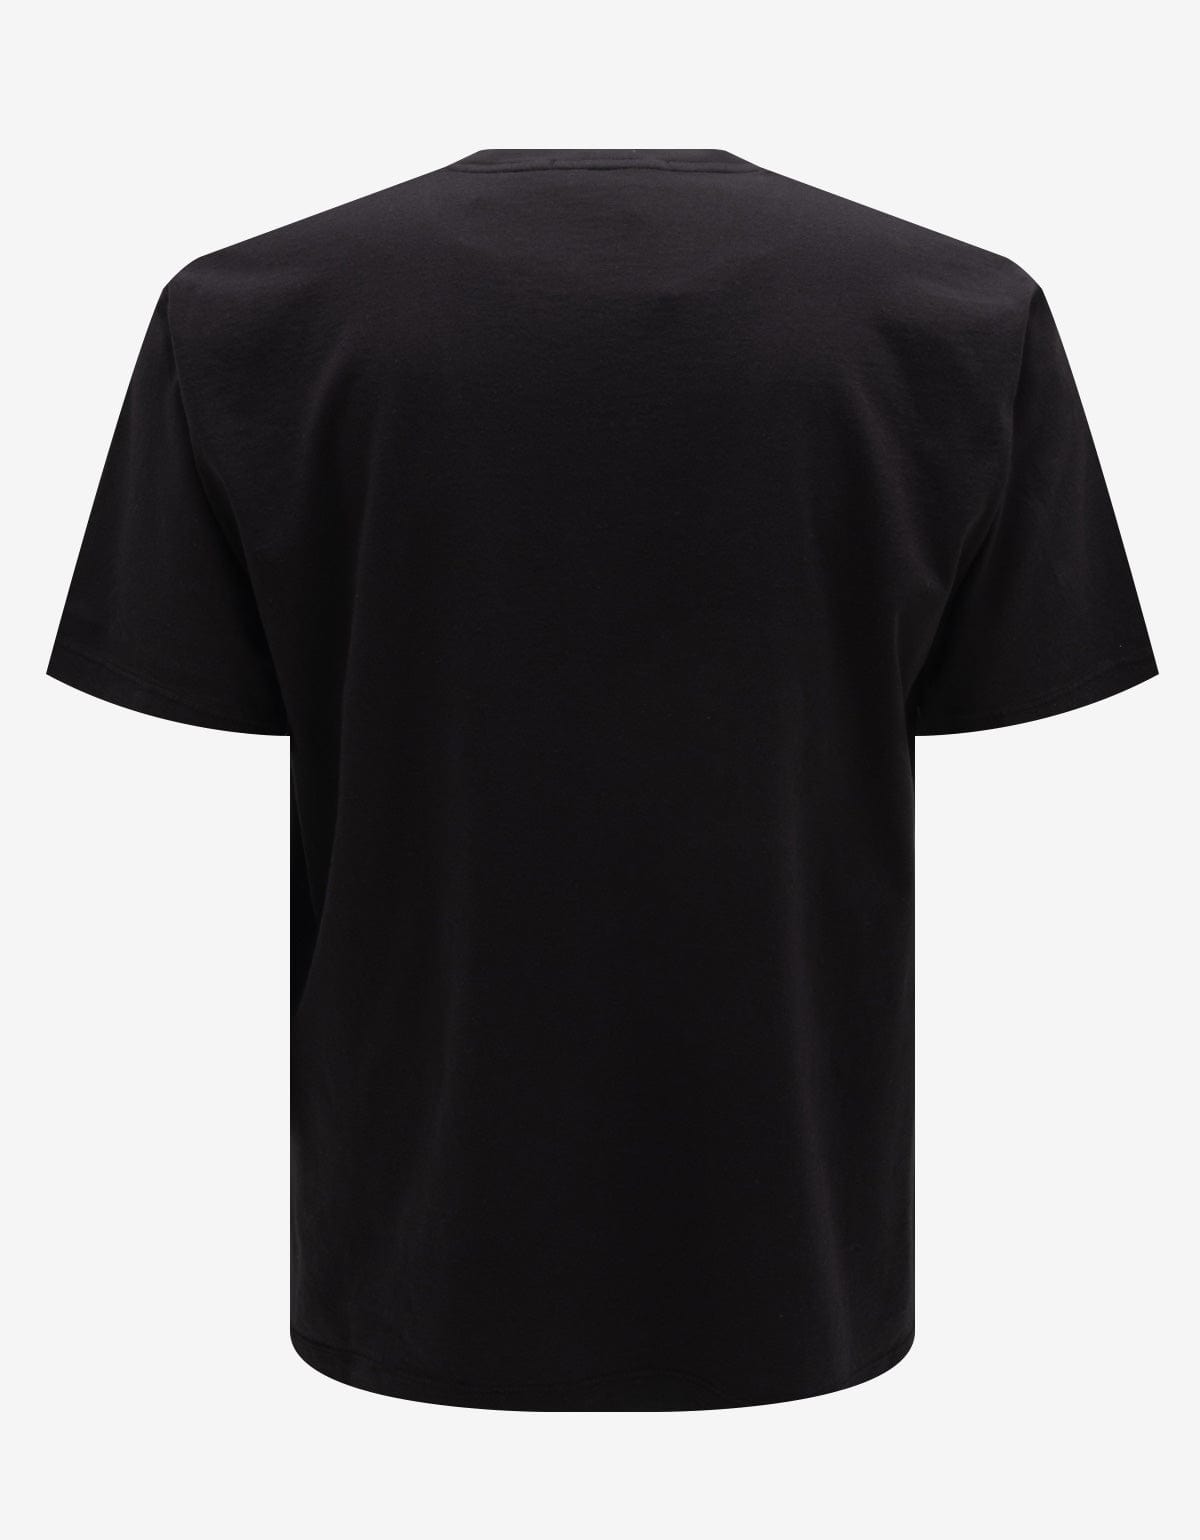 Stone Island Black Logo T-Shirt